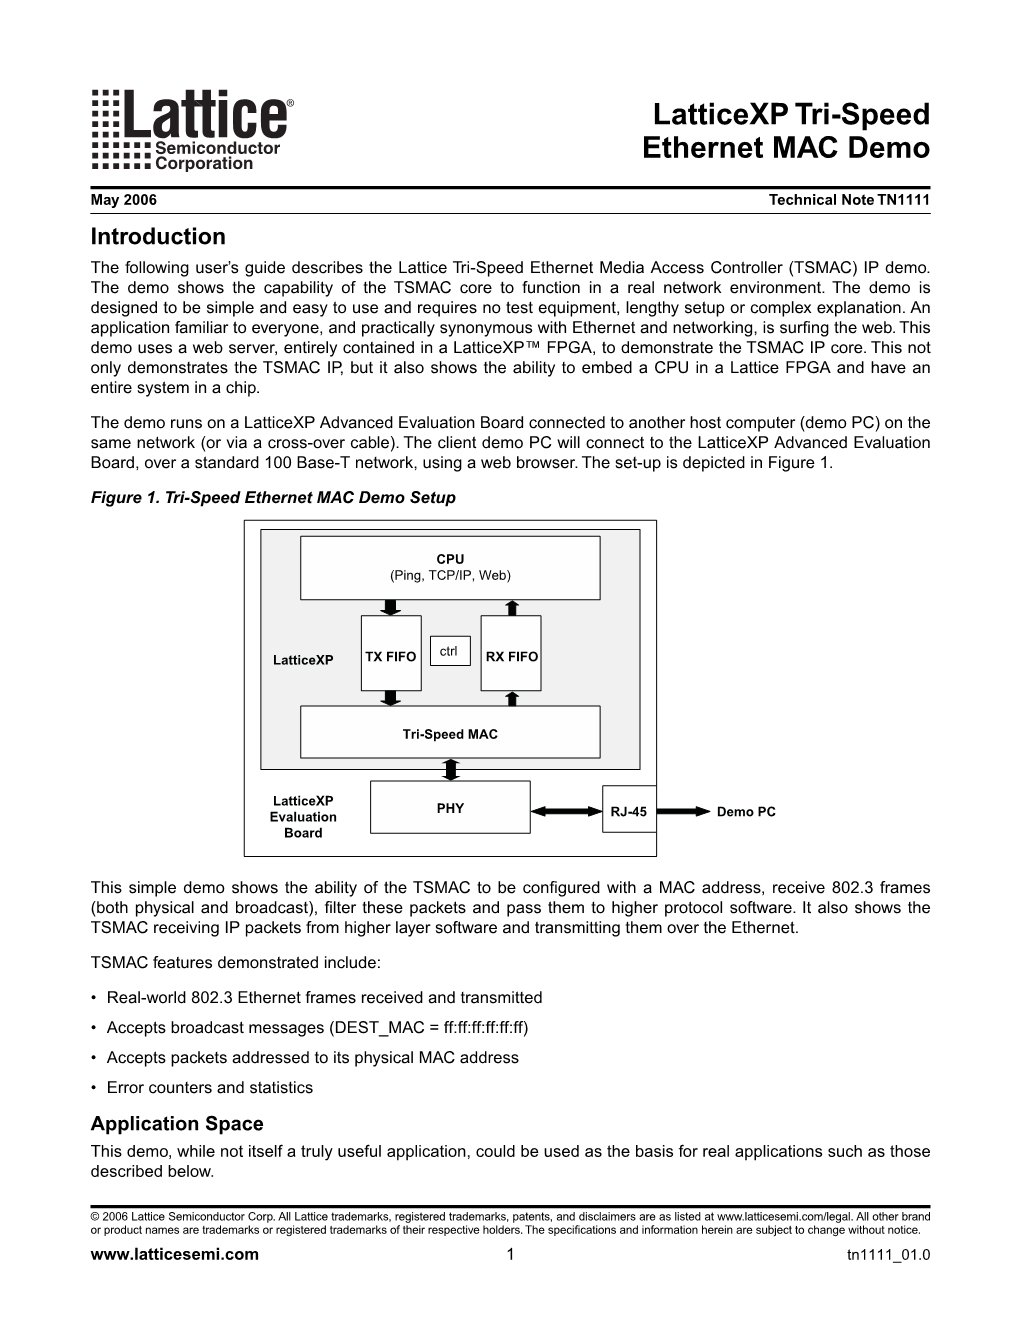 Latticexp Tri-Speed Ethernet MAC Demo Technical Note